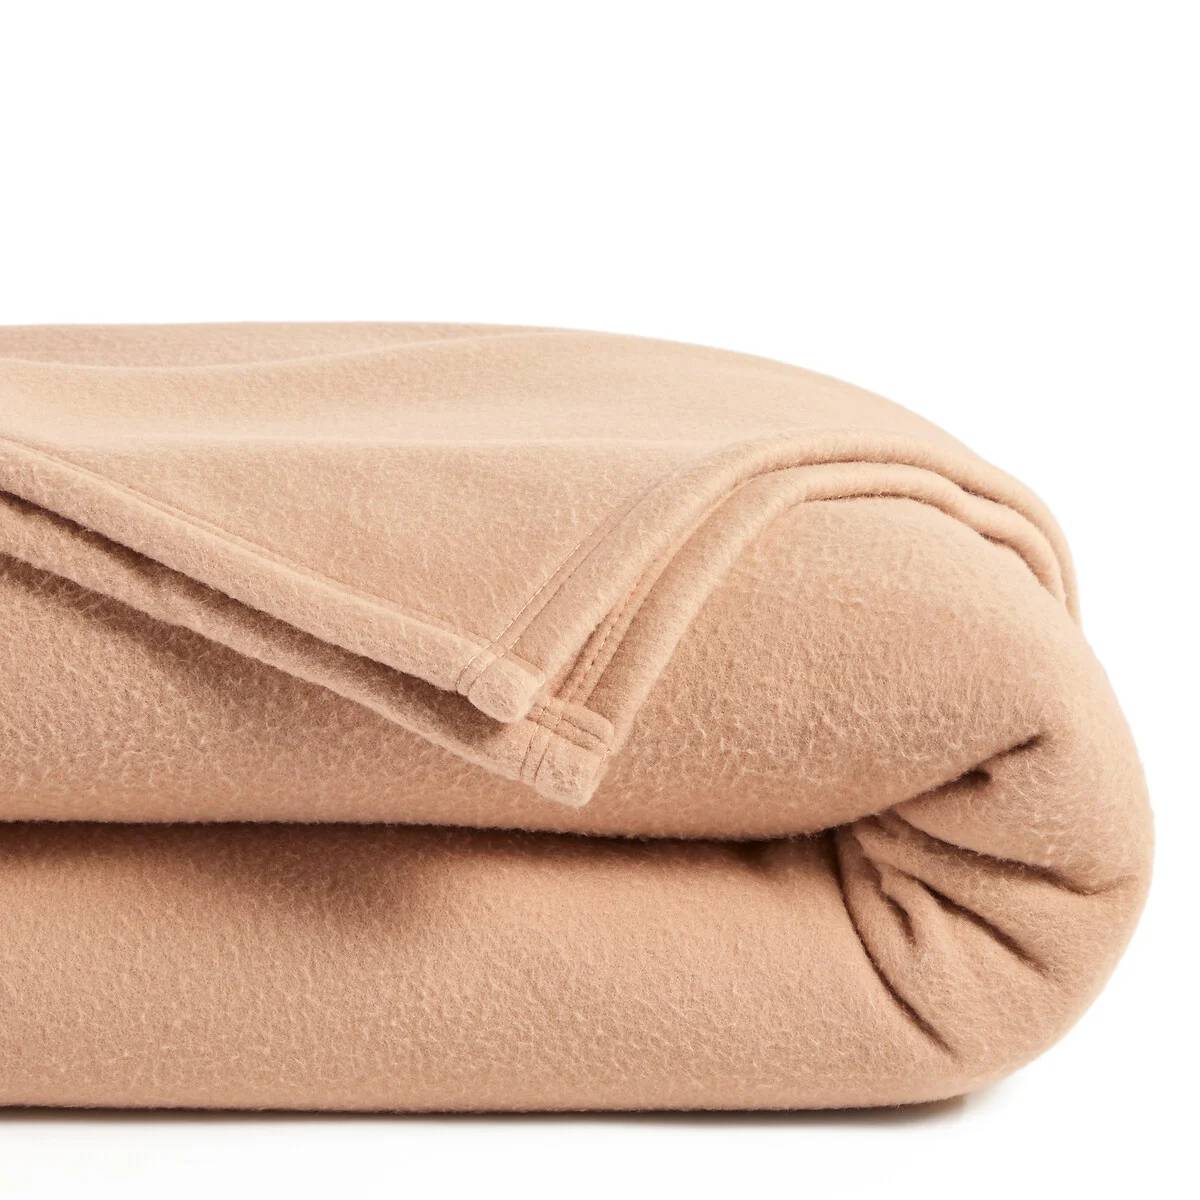 SOHUM Fleece Blanket - Plain Brown - 60x90